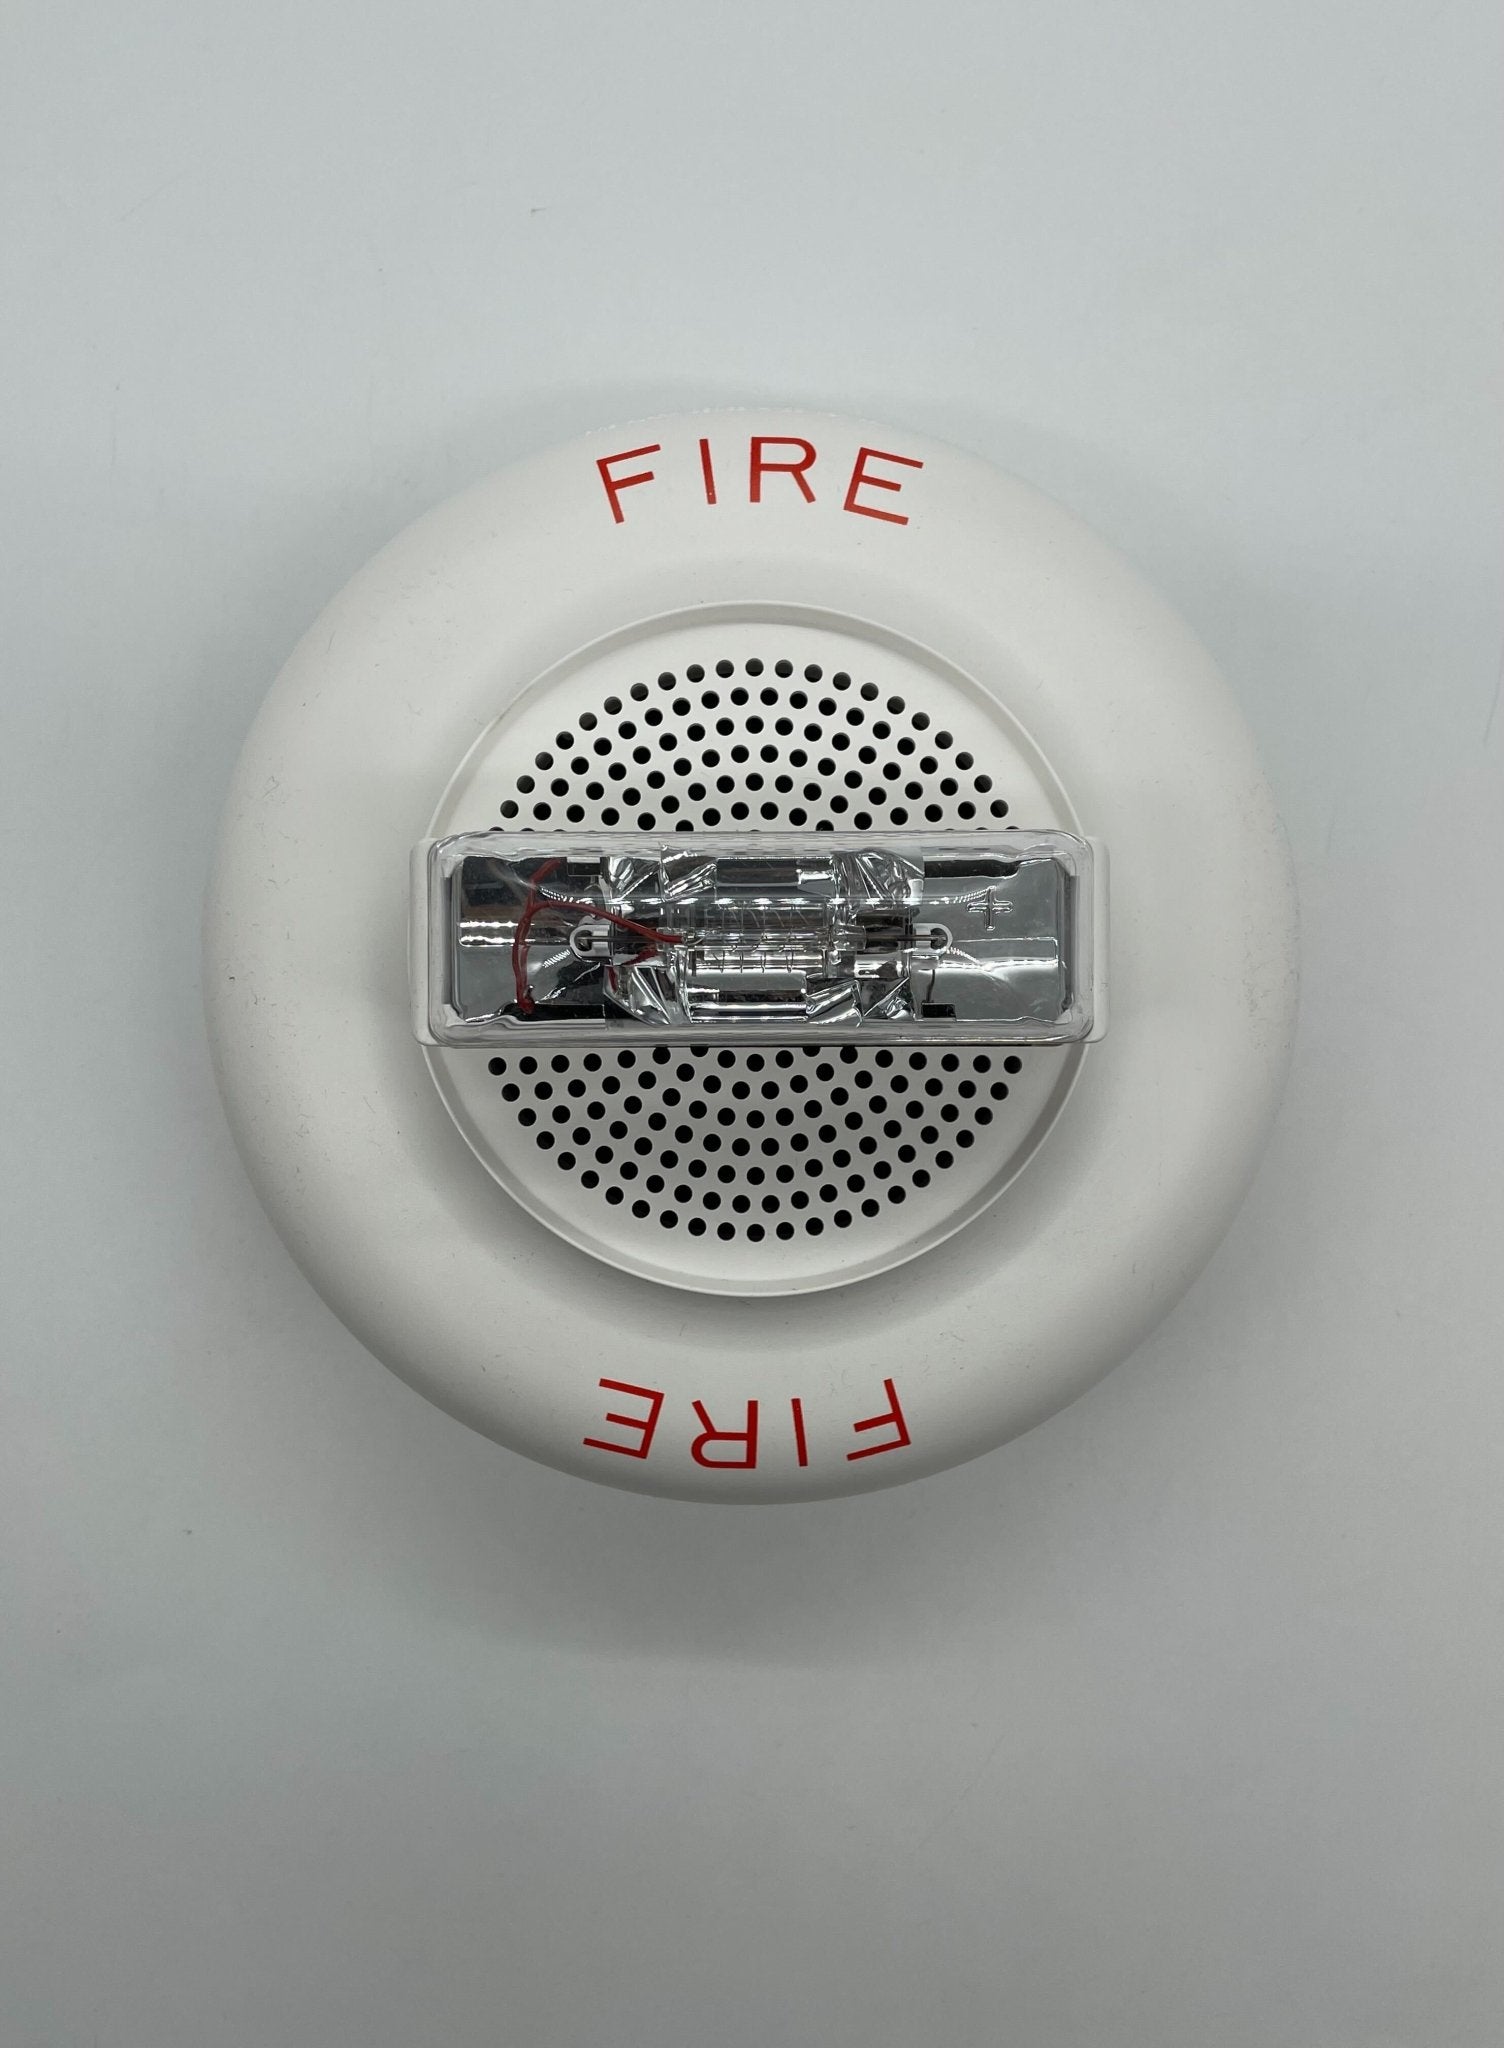 Wheelock E60H-24MCC-FW - The Fire Alarm Supplier